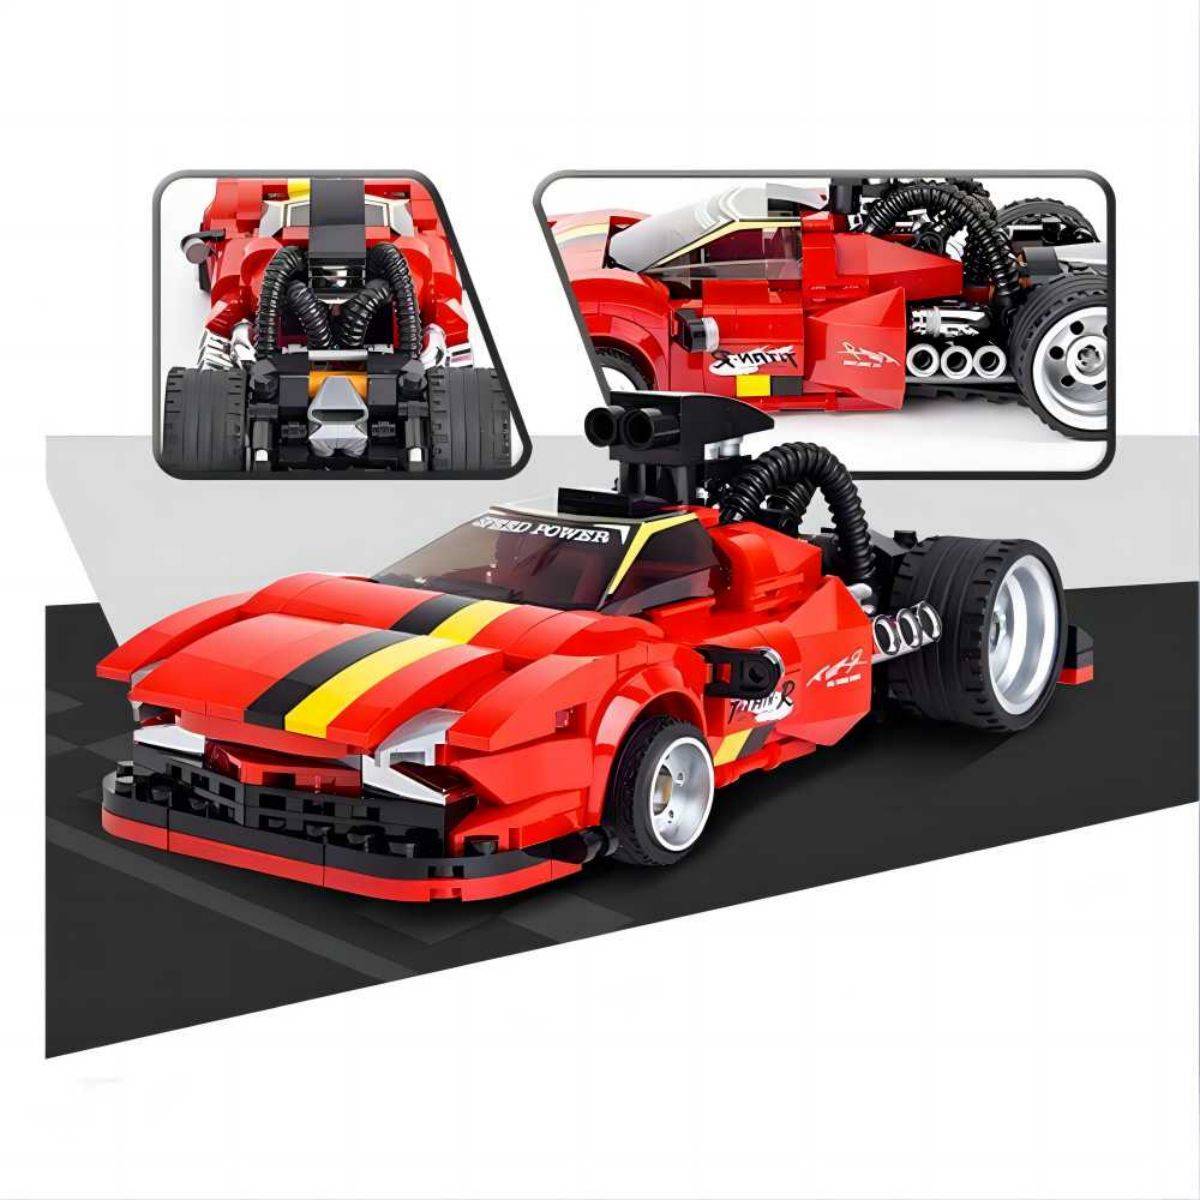 1:24 Red Cool Racing Car Assembled DIY Educational Building Blocks KC003 - Hugmie